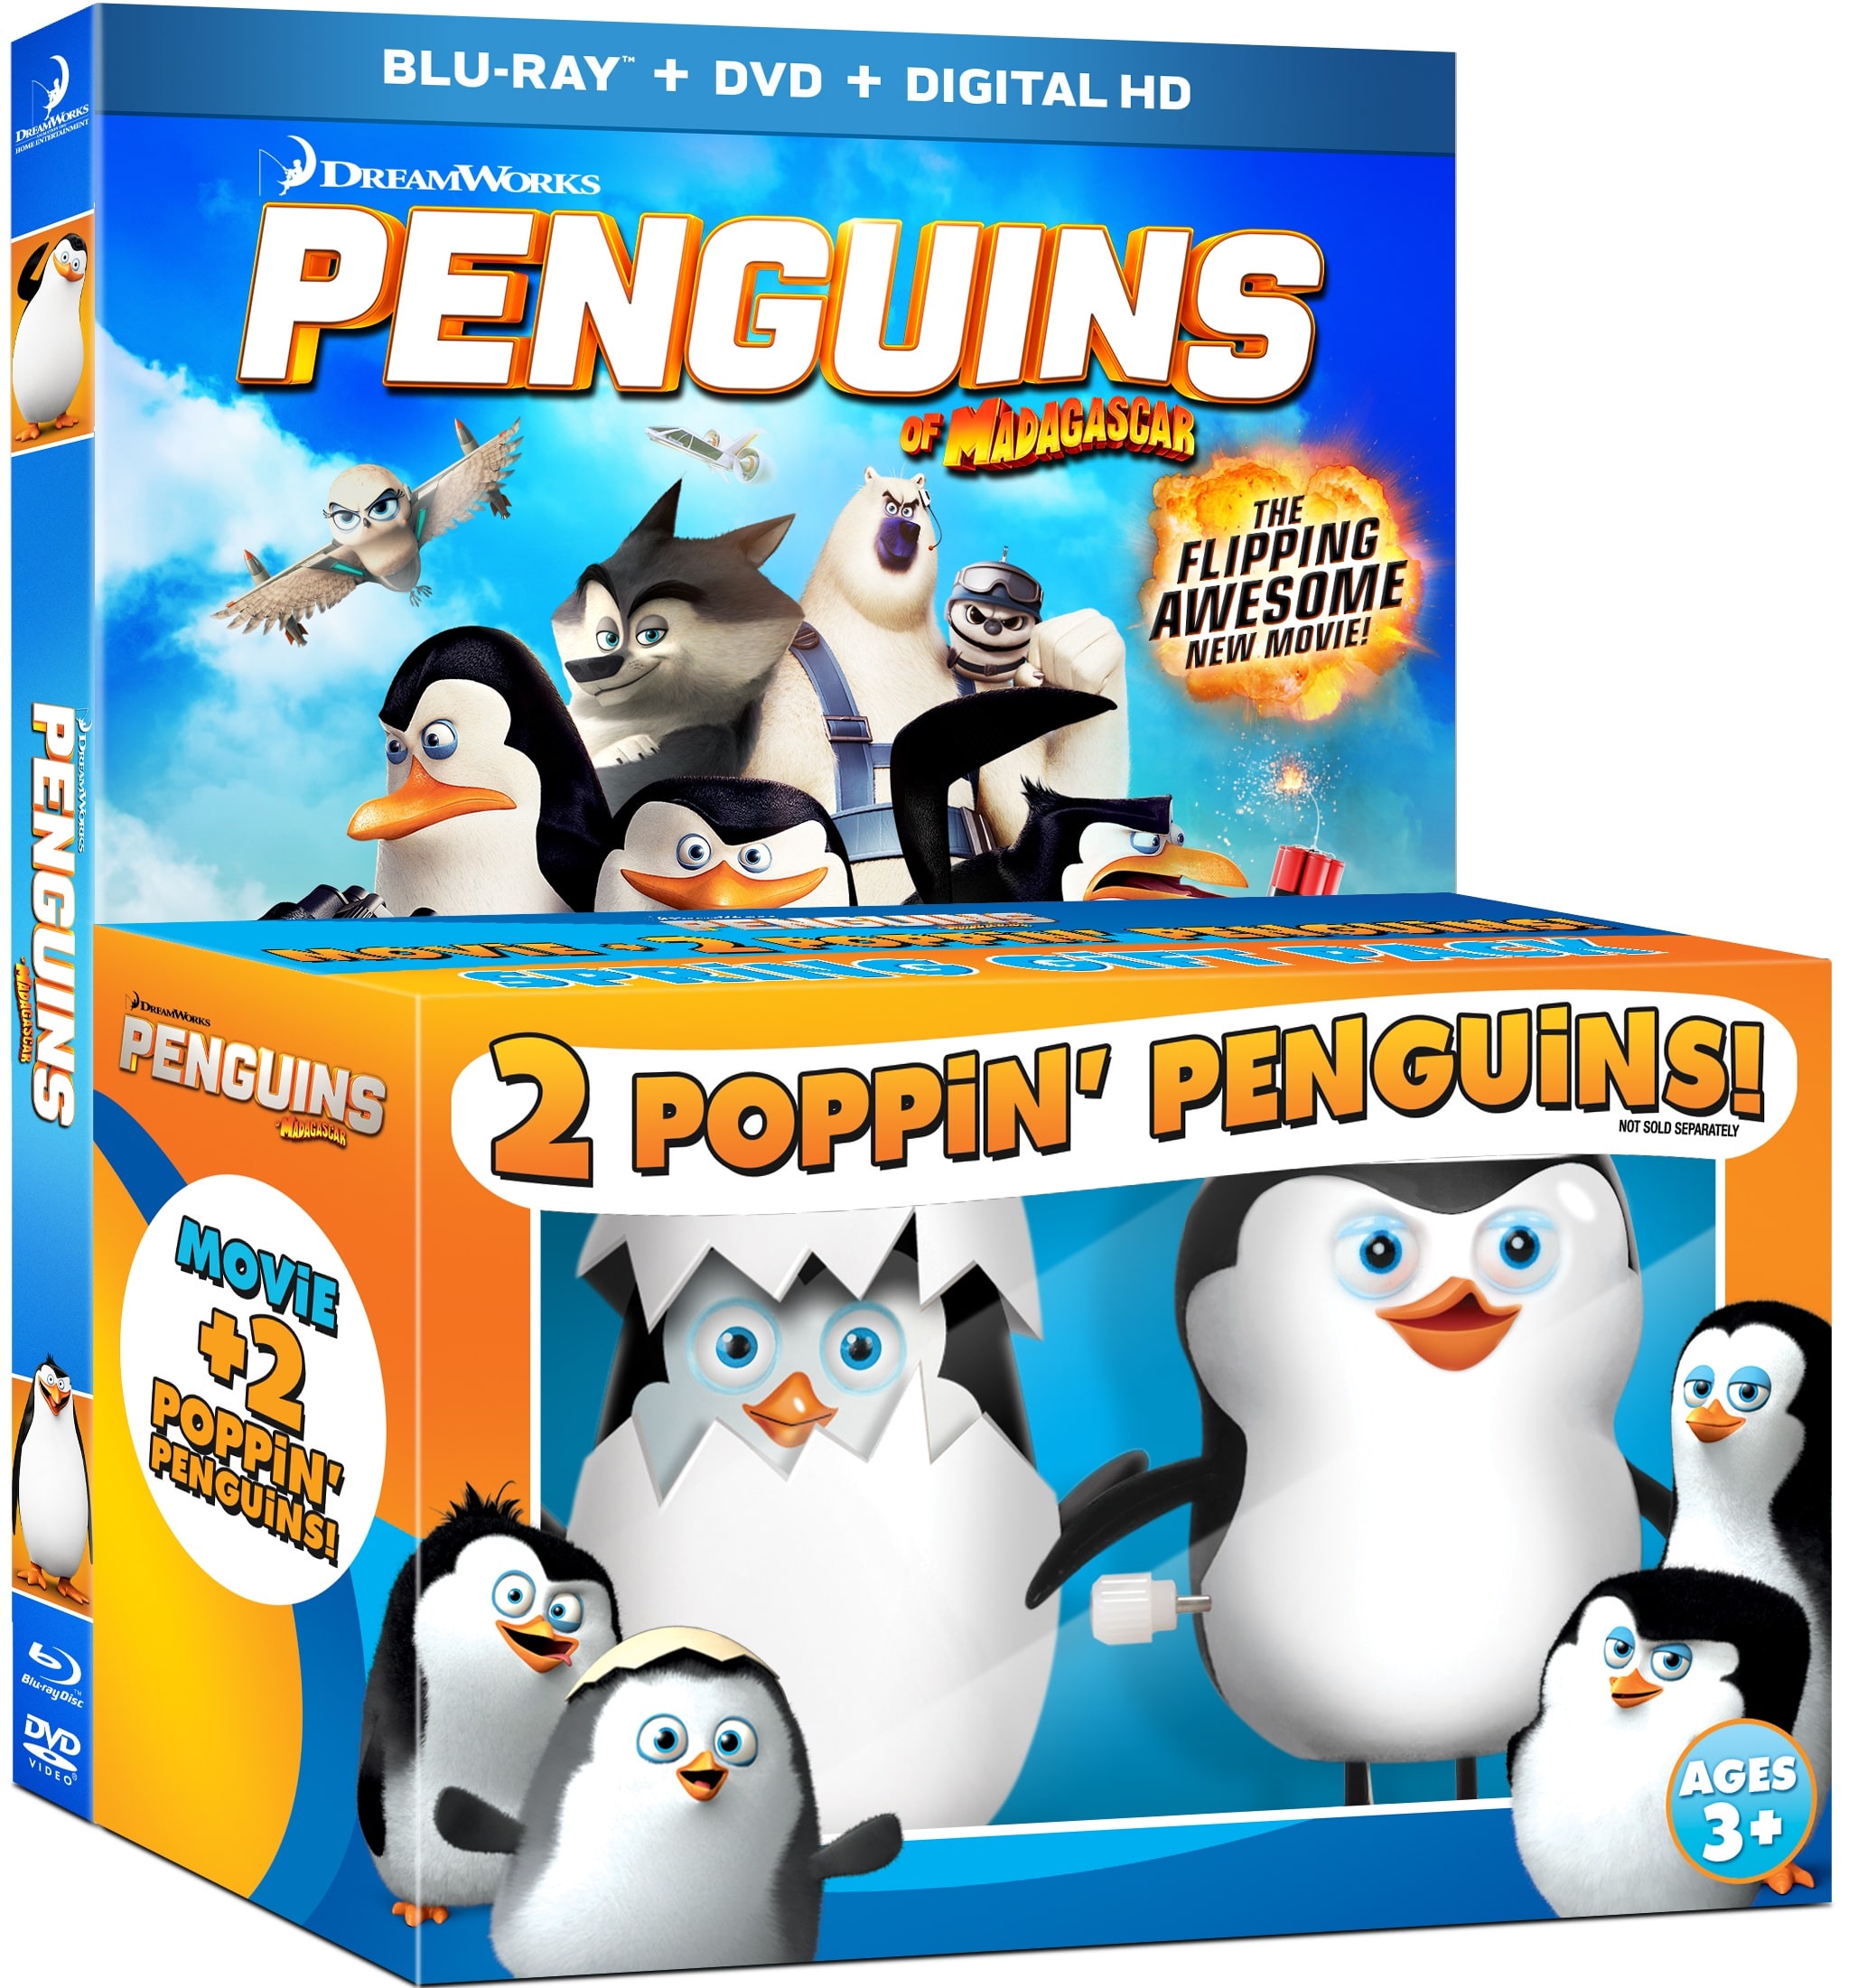 Penguins of Madagascar DVD Details: Revealed! - Movie Fanatic